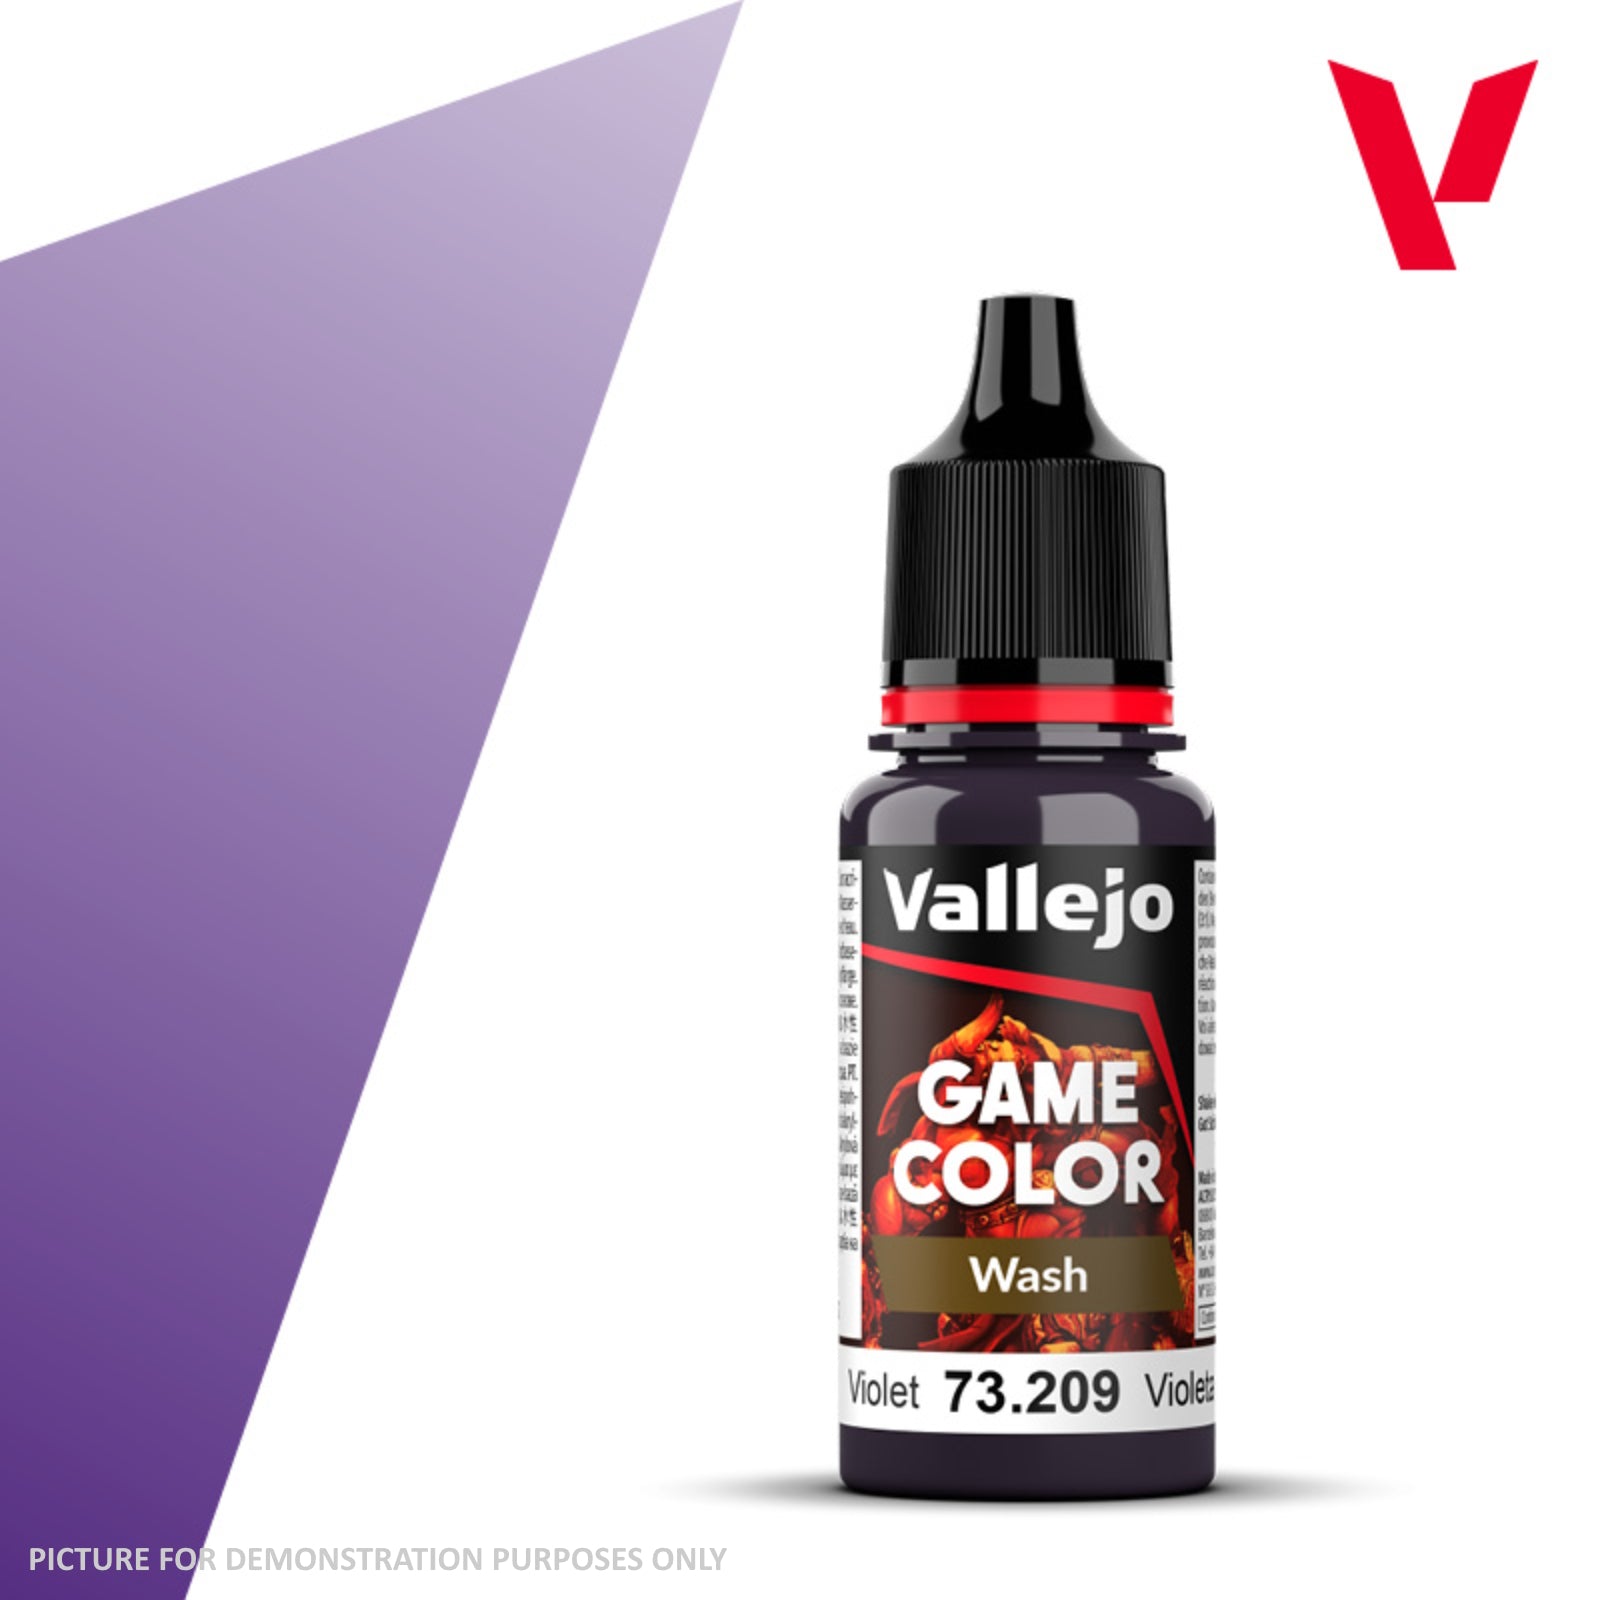 Vallejo Game Colour Wash - 73.209 Violet 18ml